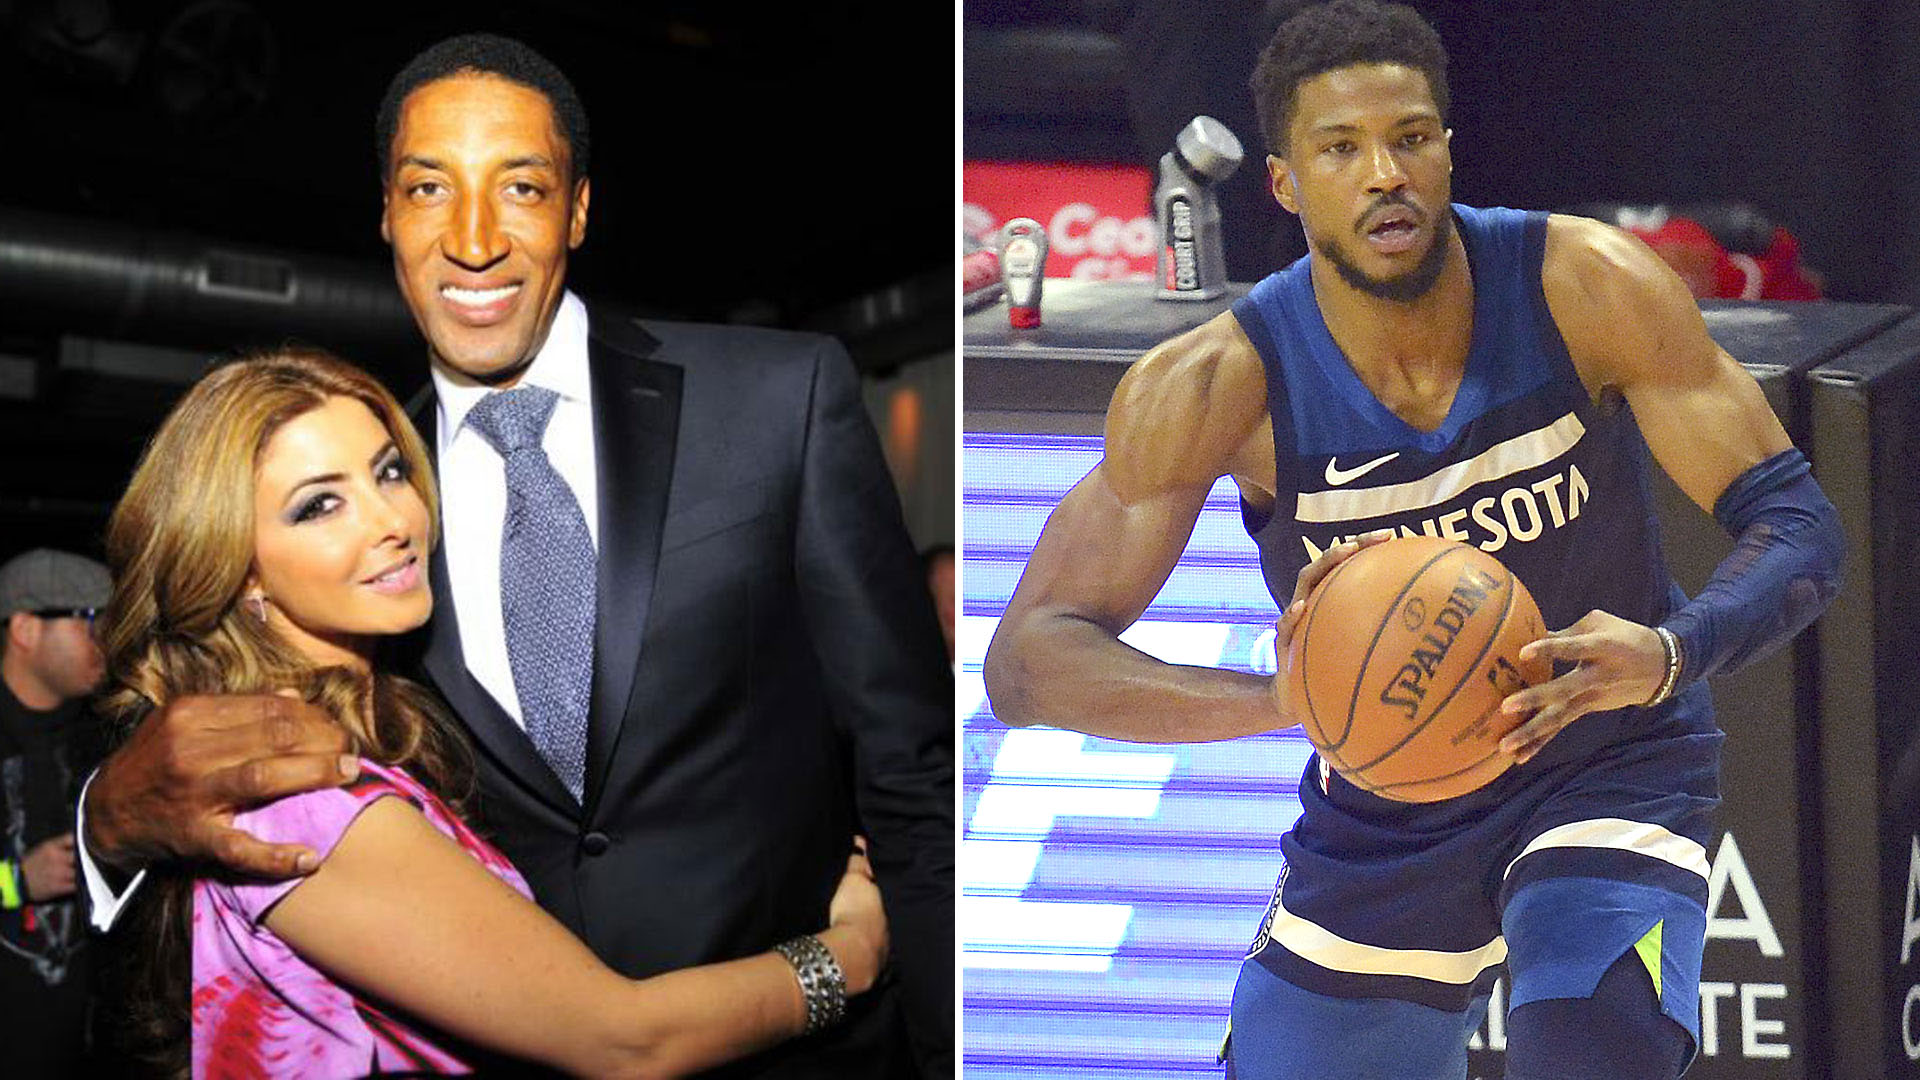 Pippen's ex-wife had an affair with an NBA player who had an affair